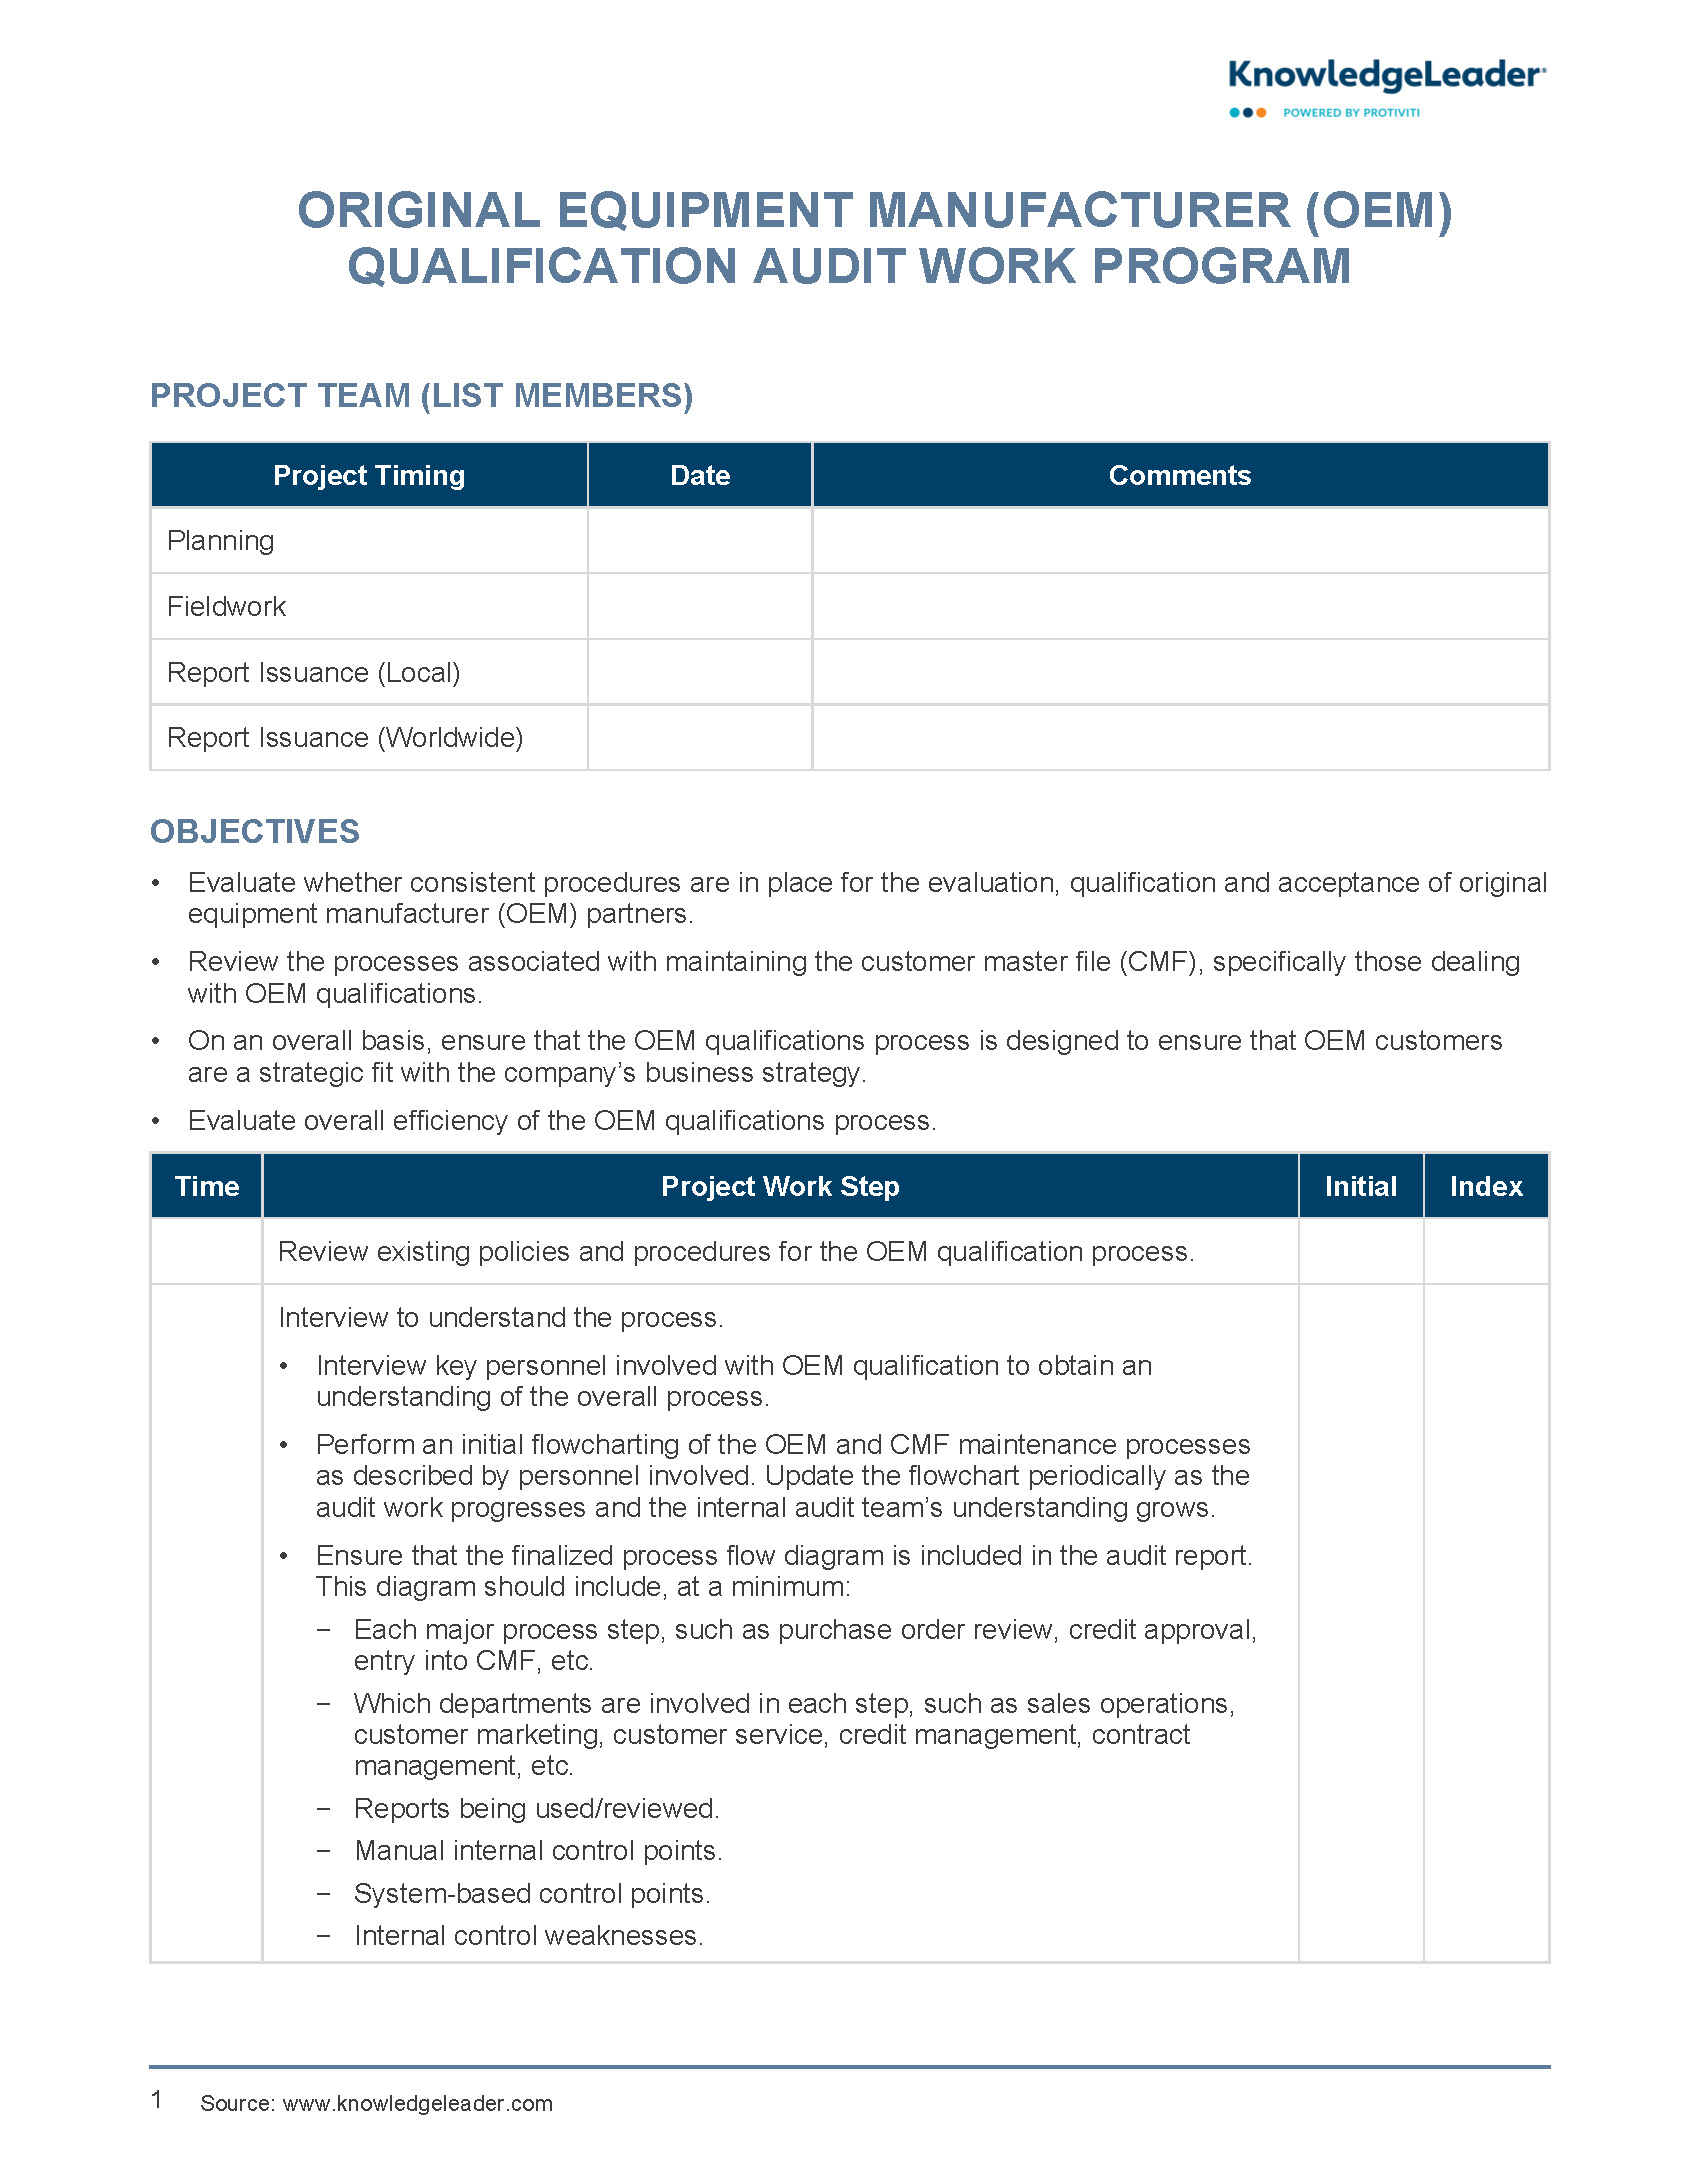 Original Equipment Manufacturer Qualification Audit Work Program